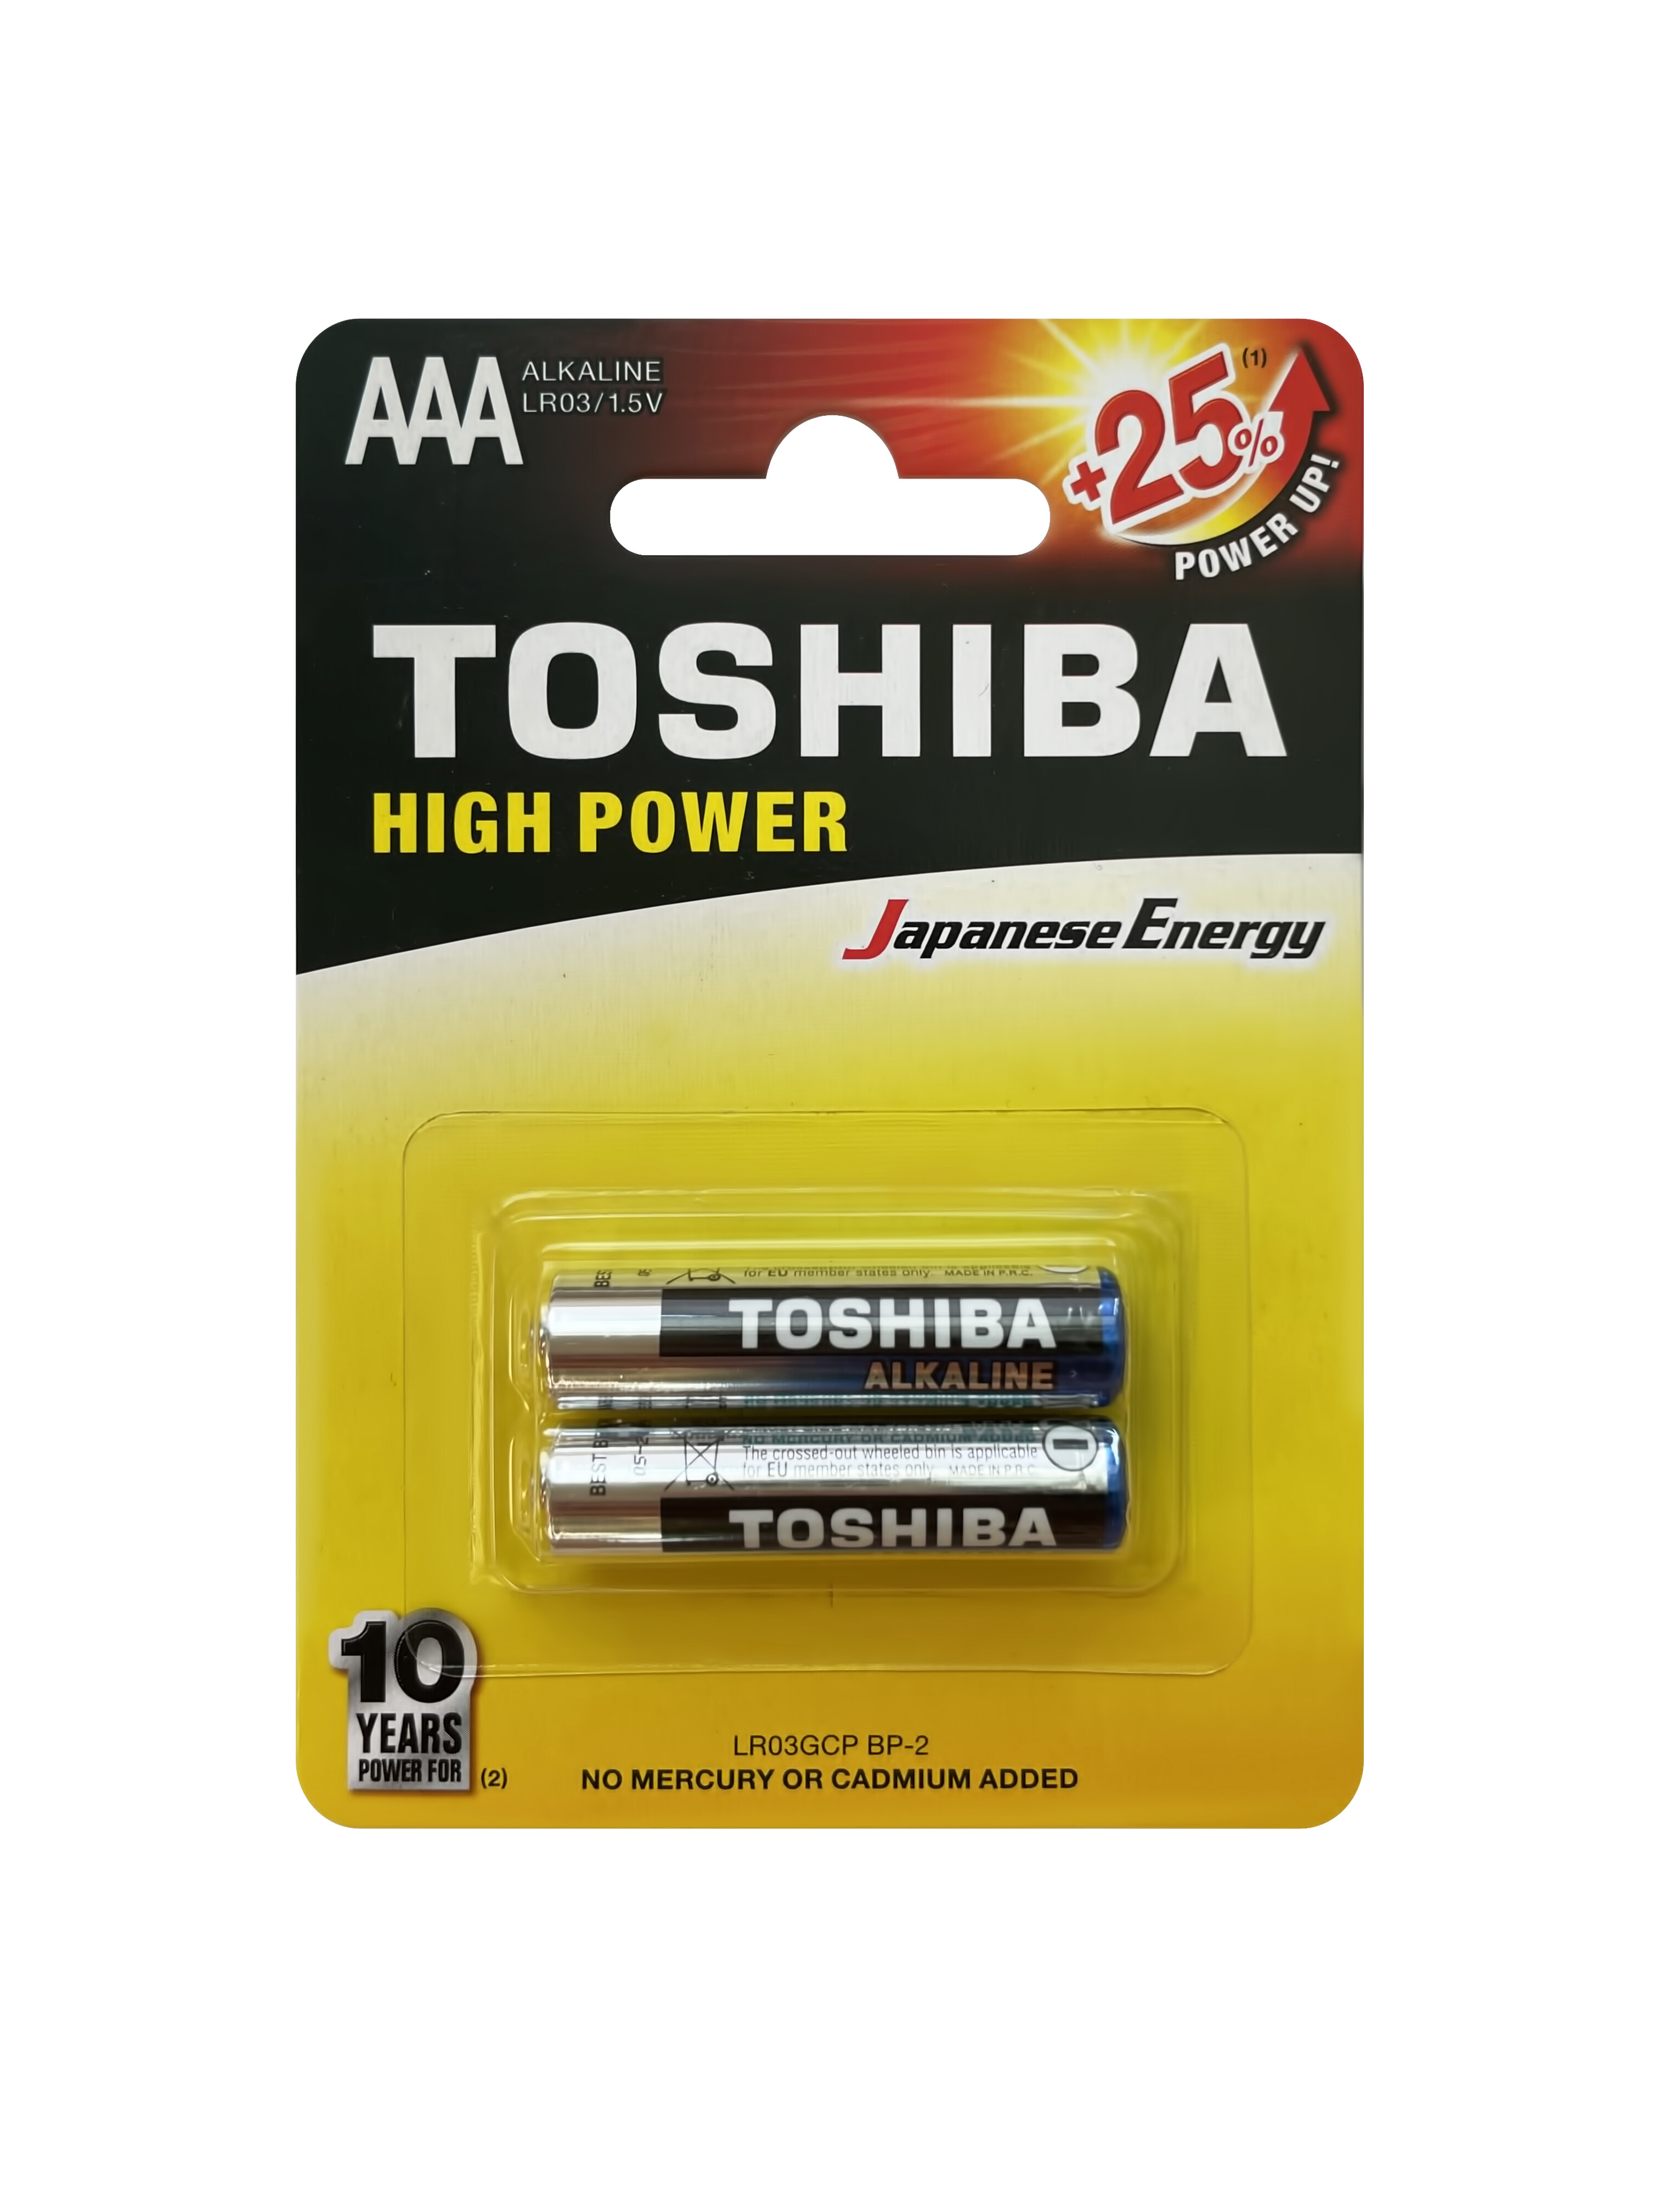 Батарейки Toshiba LR03 щелочные (alkaline) МИЗИНЧИК High Power (2шт) AAA 1,5V батарейки toshiba lr14 щелочные alkaline дюймовочка high power 2шт c 1 5v